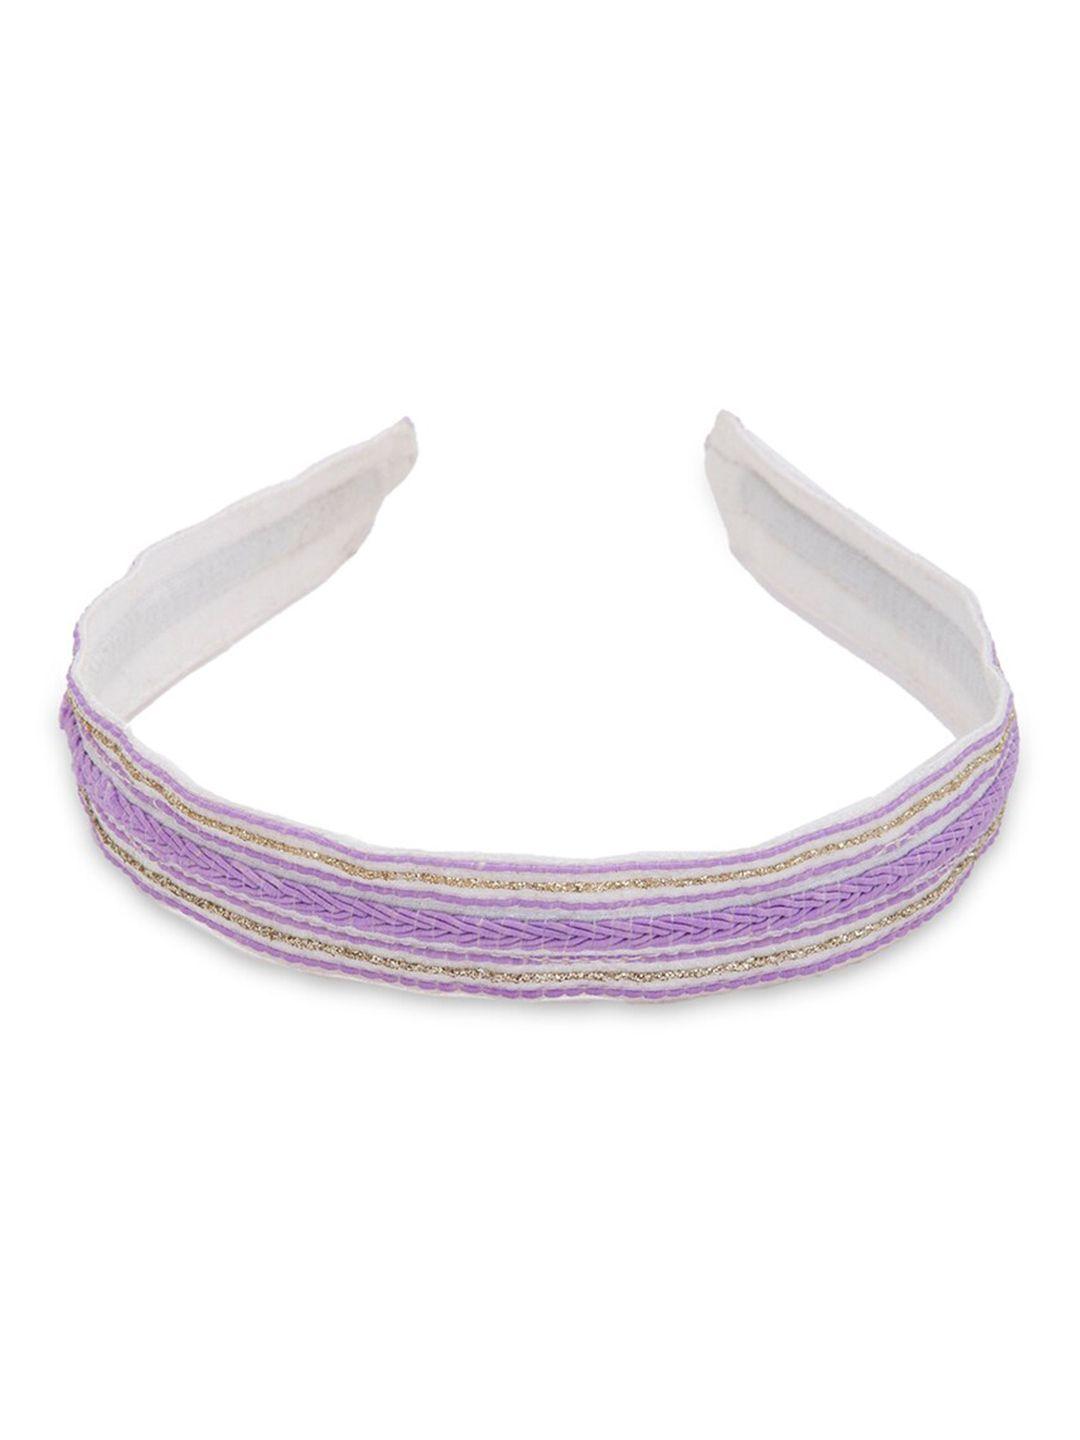 deebaco girls purple & white embellished hairband